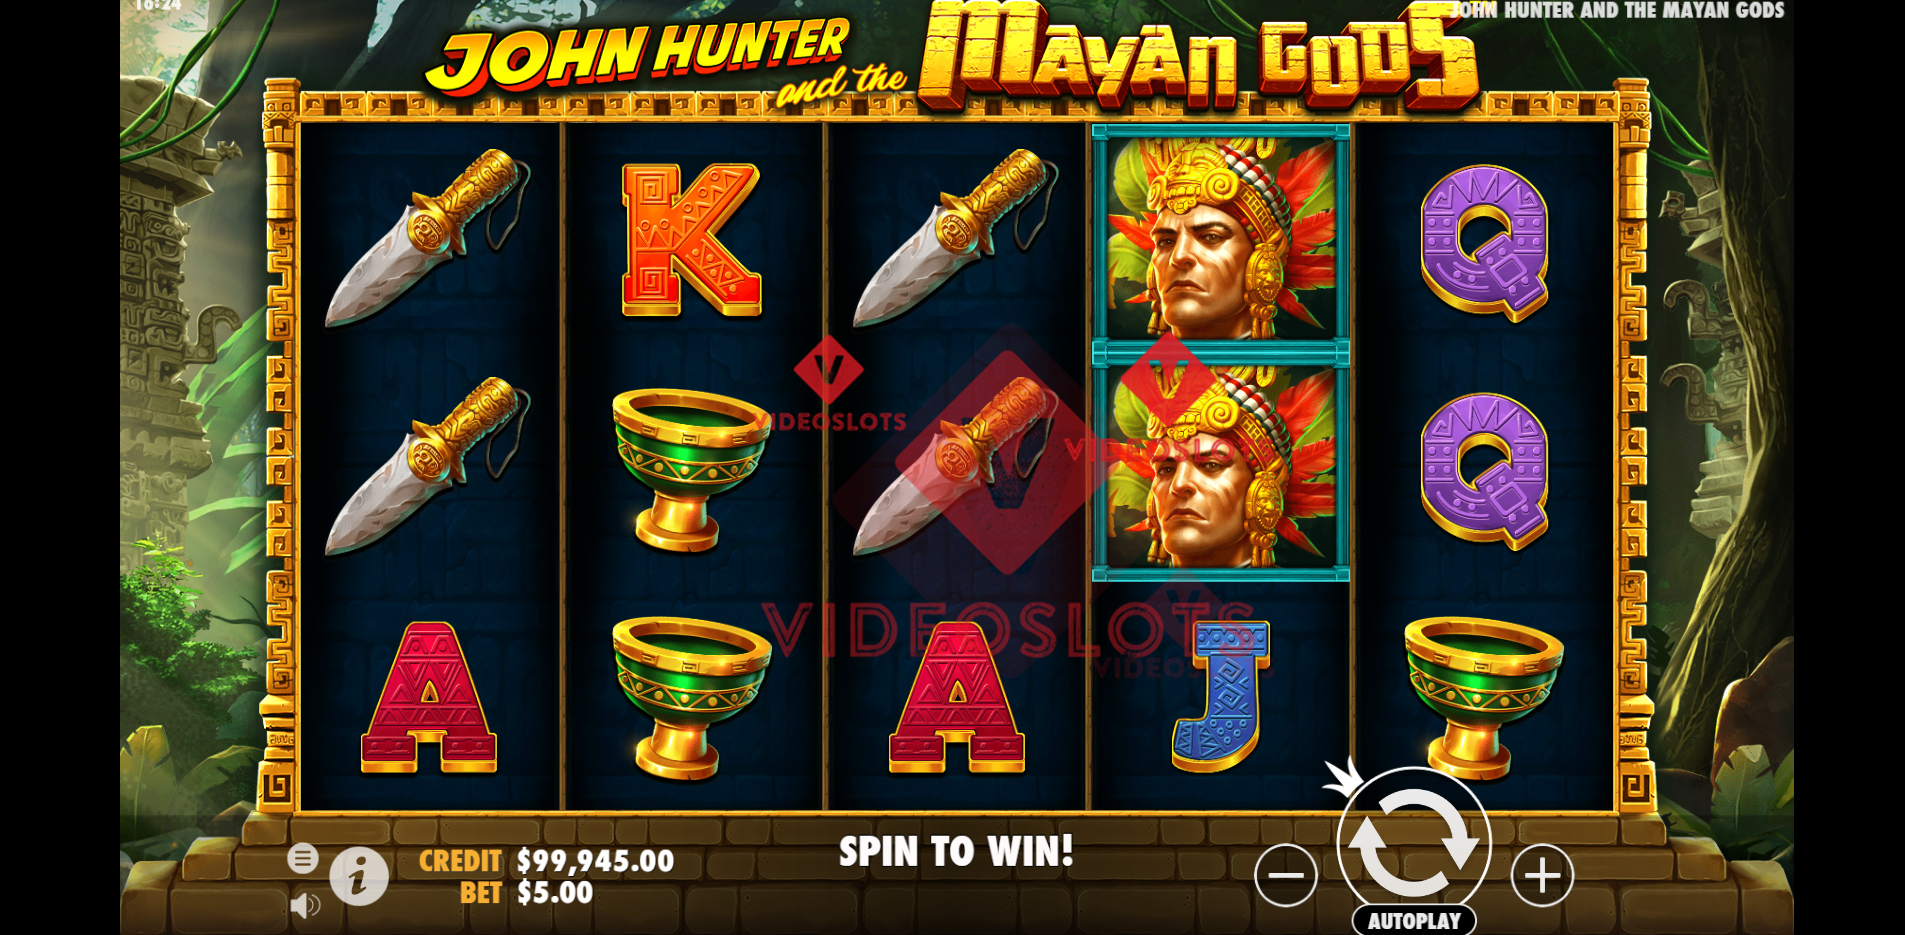 Base Game for John Hunter and The Mayan Gods slot by Pragmatic Play